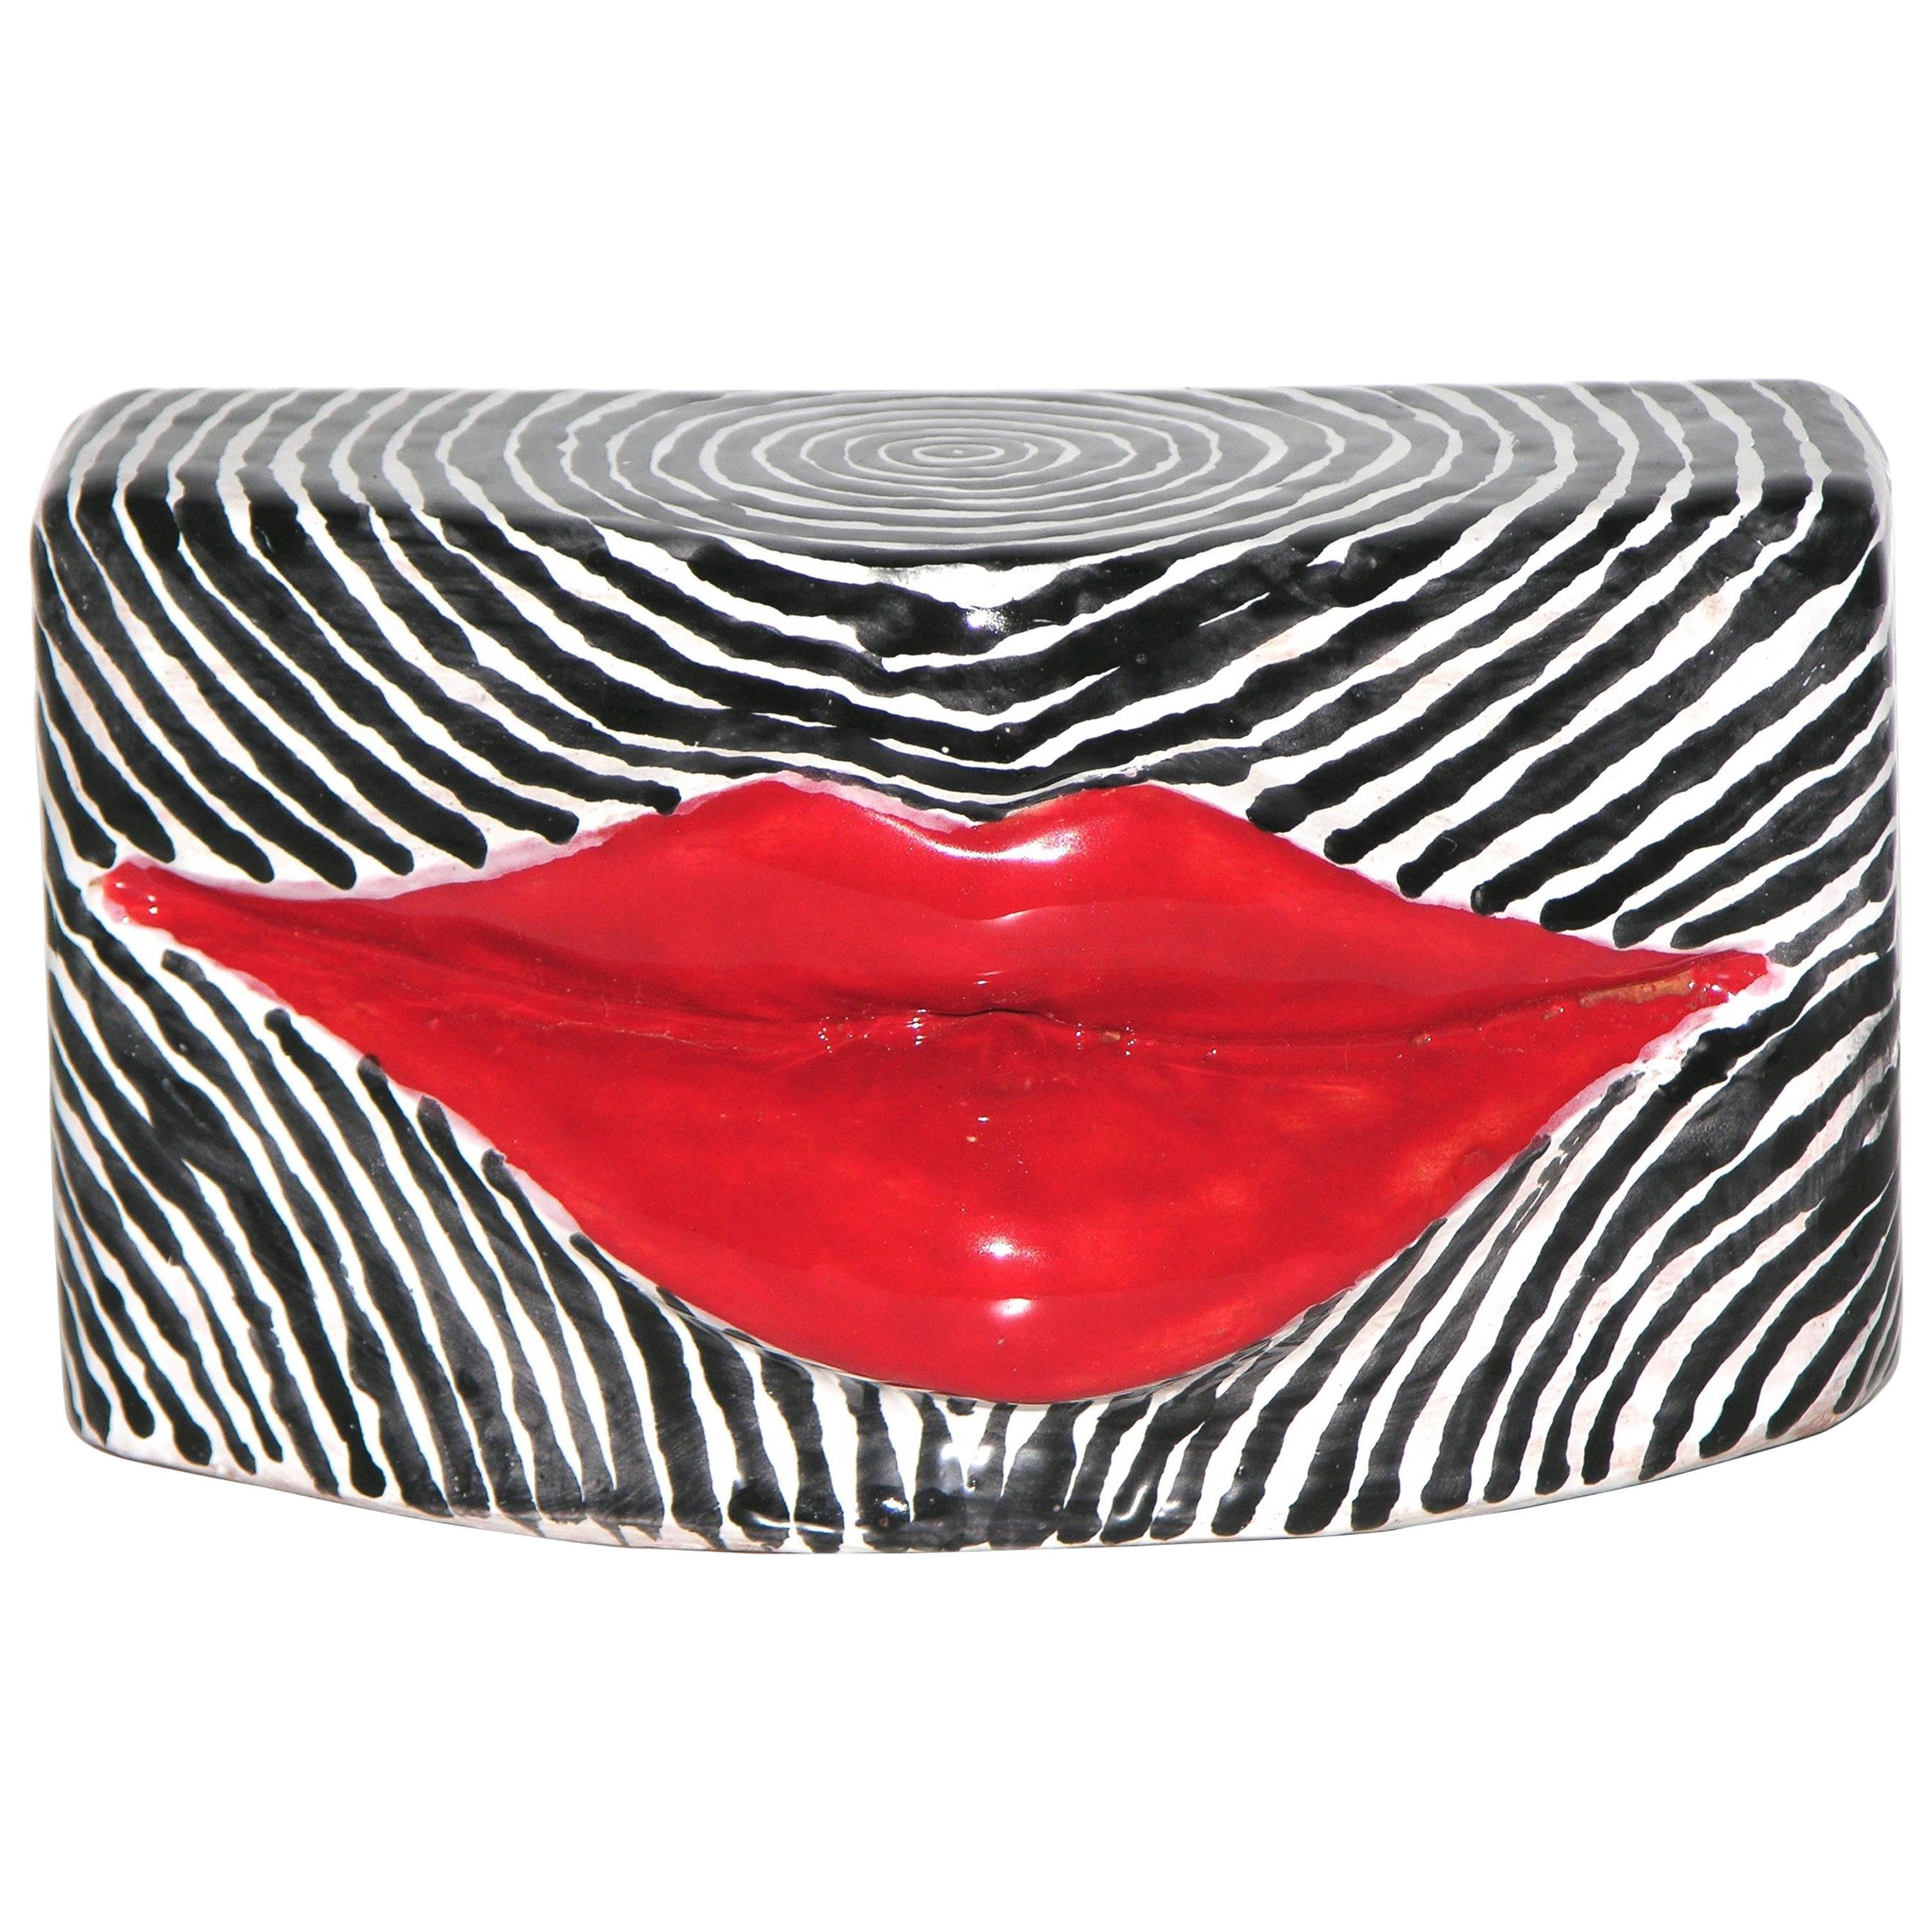 Red Lips, Black and White Enameled Terra-Cotta Kiss Sculpture